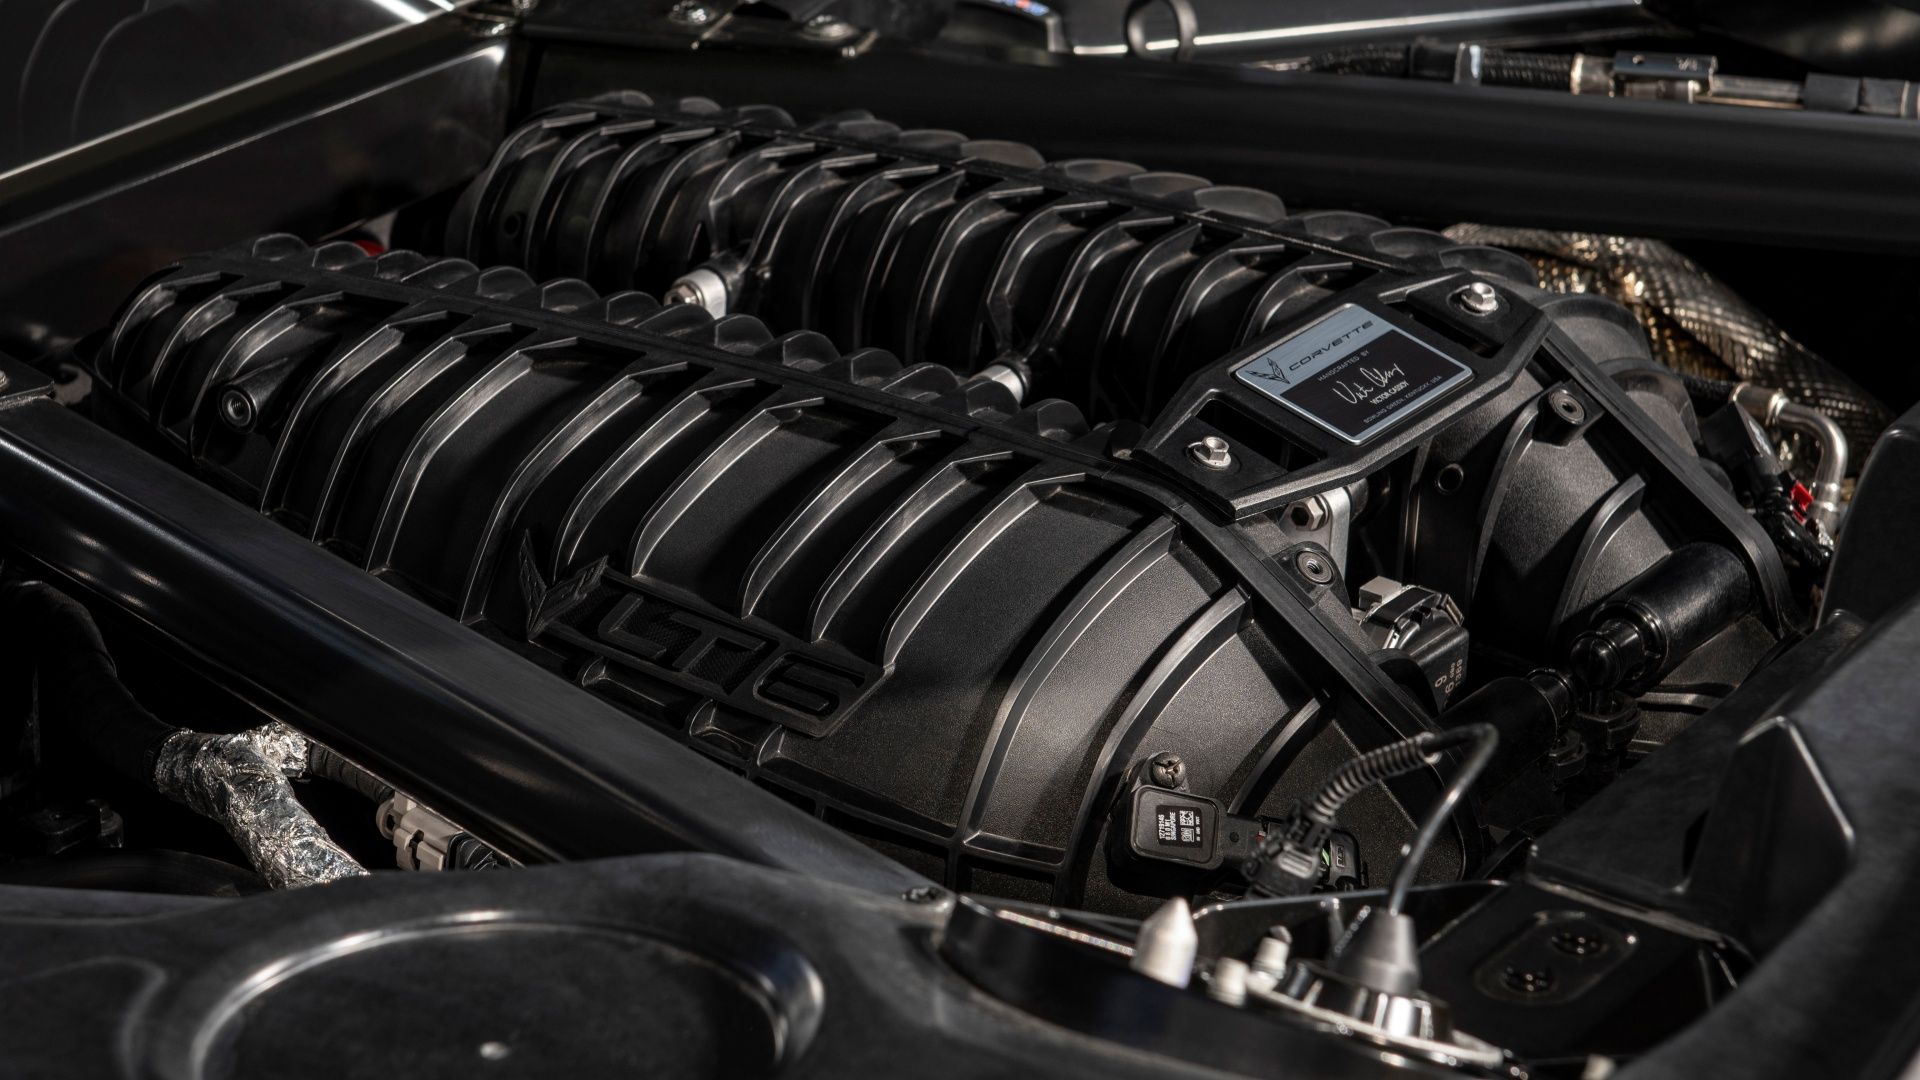 A studio shot of the V-8 engine of the Chevrolet Corvette Z06